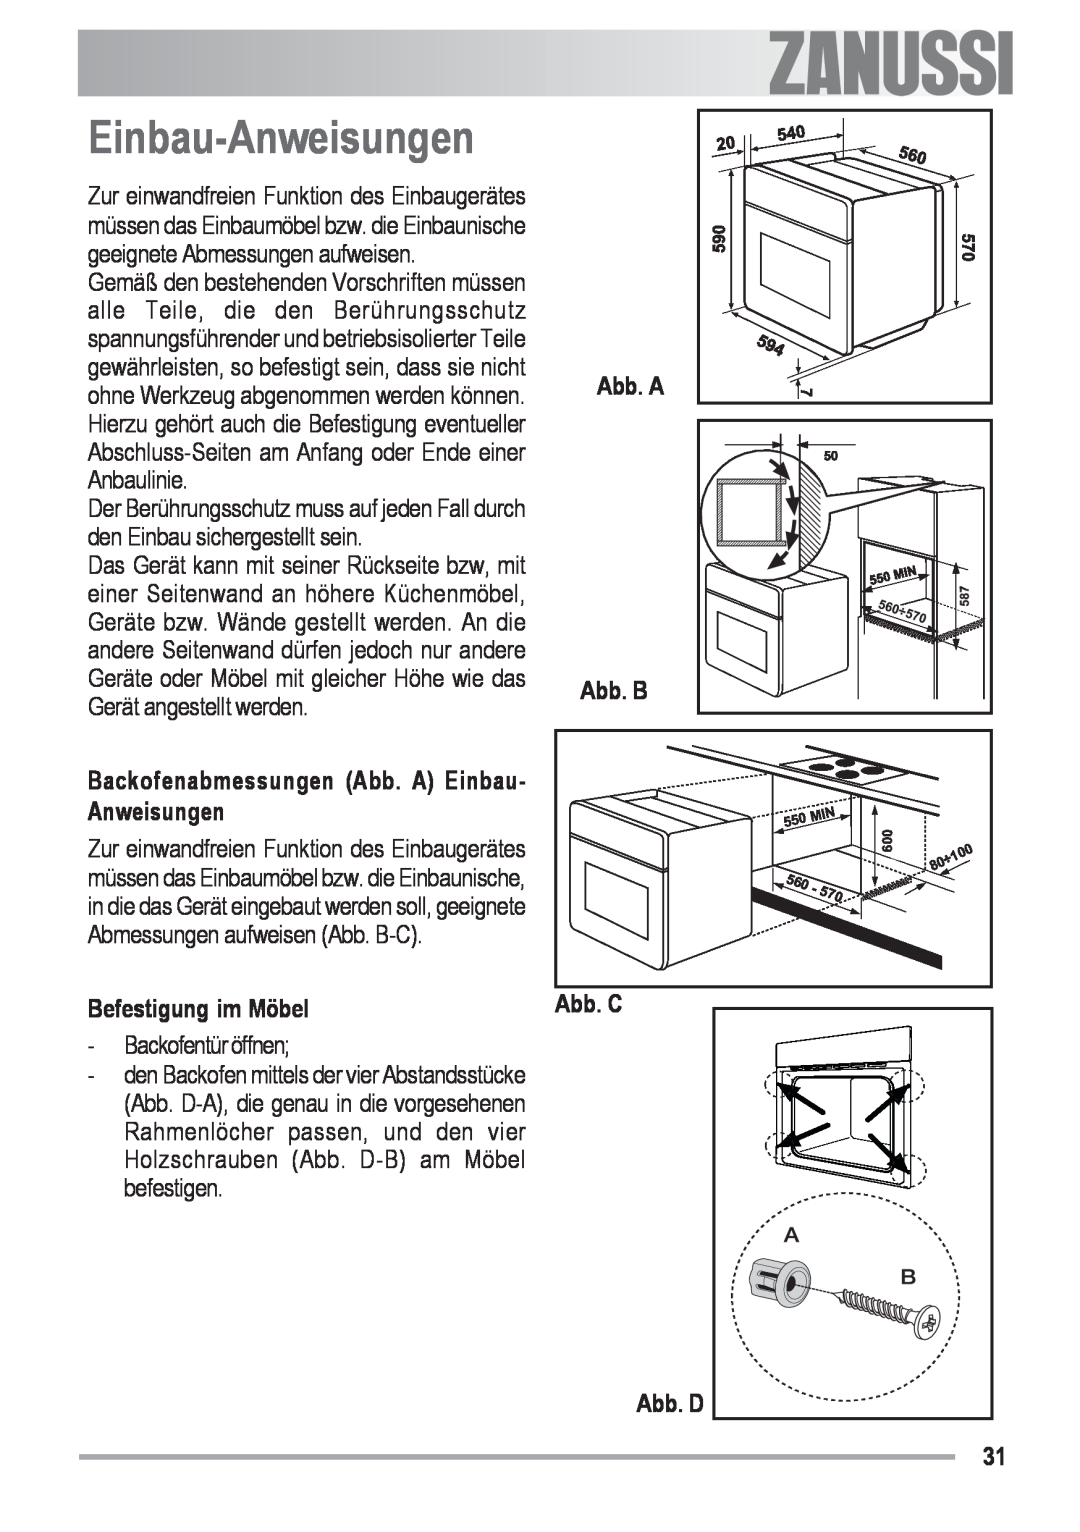 Zanussi ZOB 590 Einbau-Anweisungen, Abb. A Abb. B, Backofenabmessungen Abb. A Einbau- Anweisungen, Befestigung im Möbel 